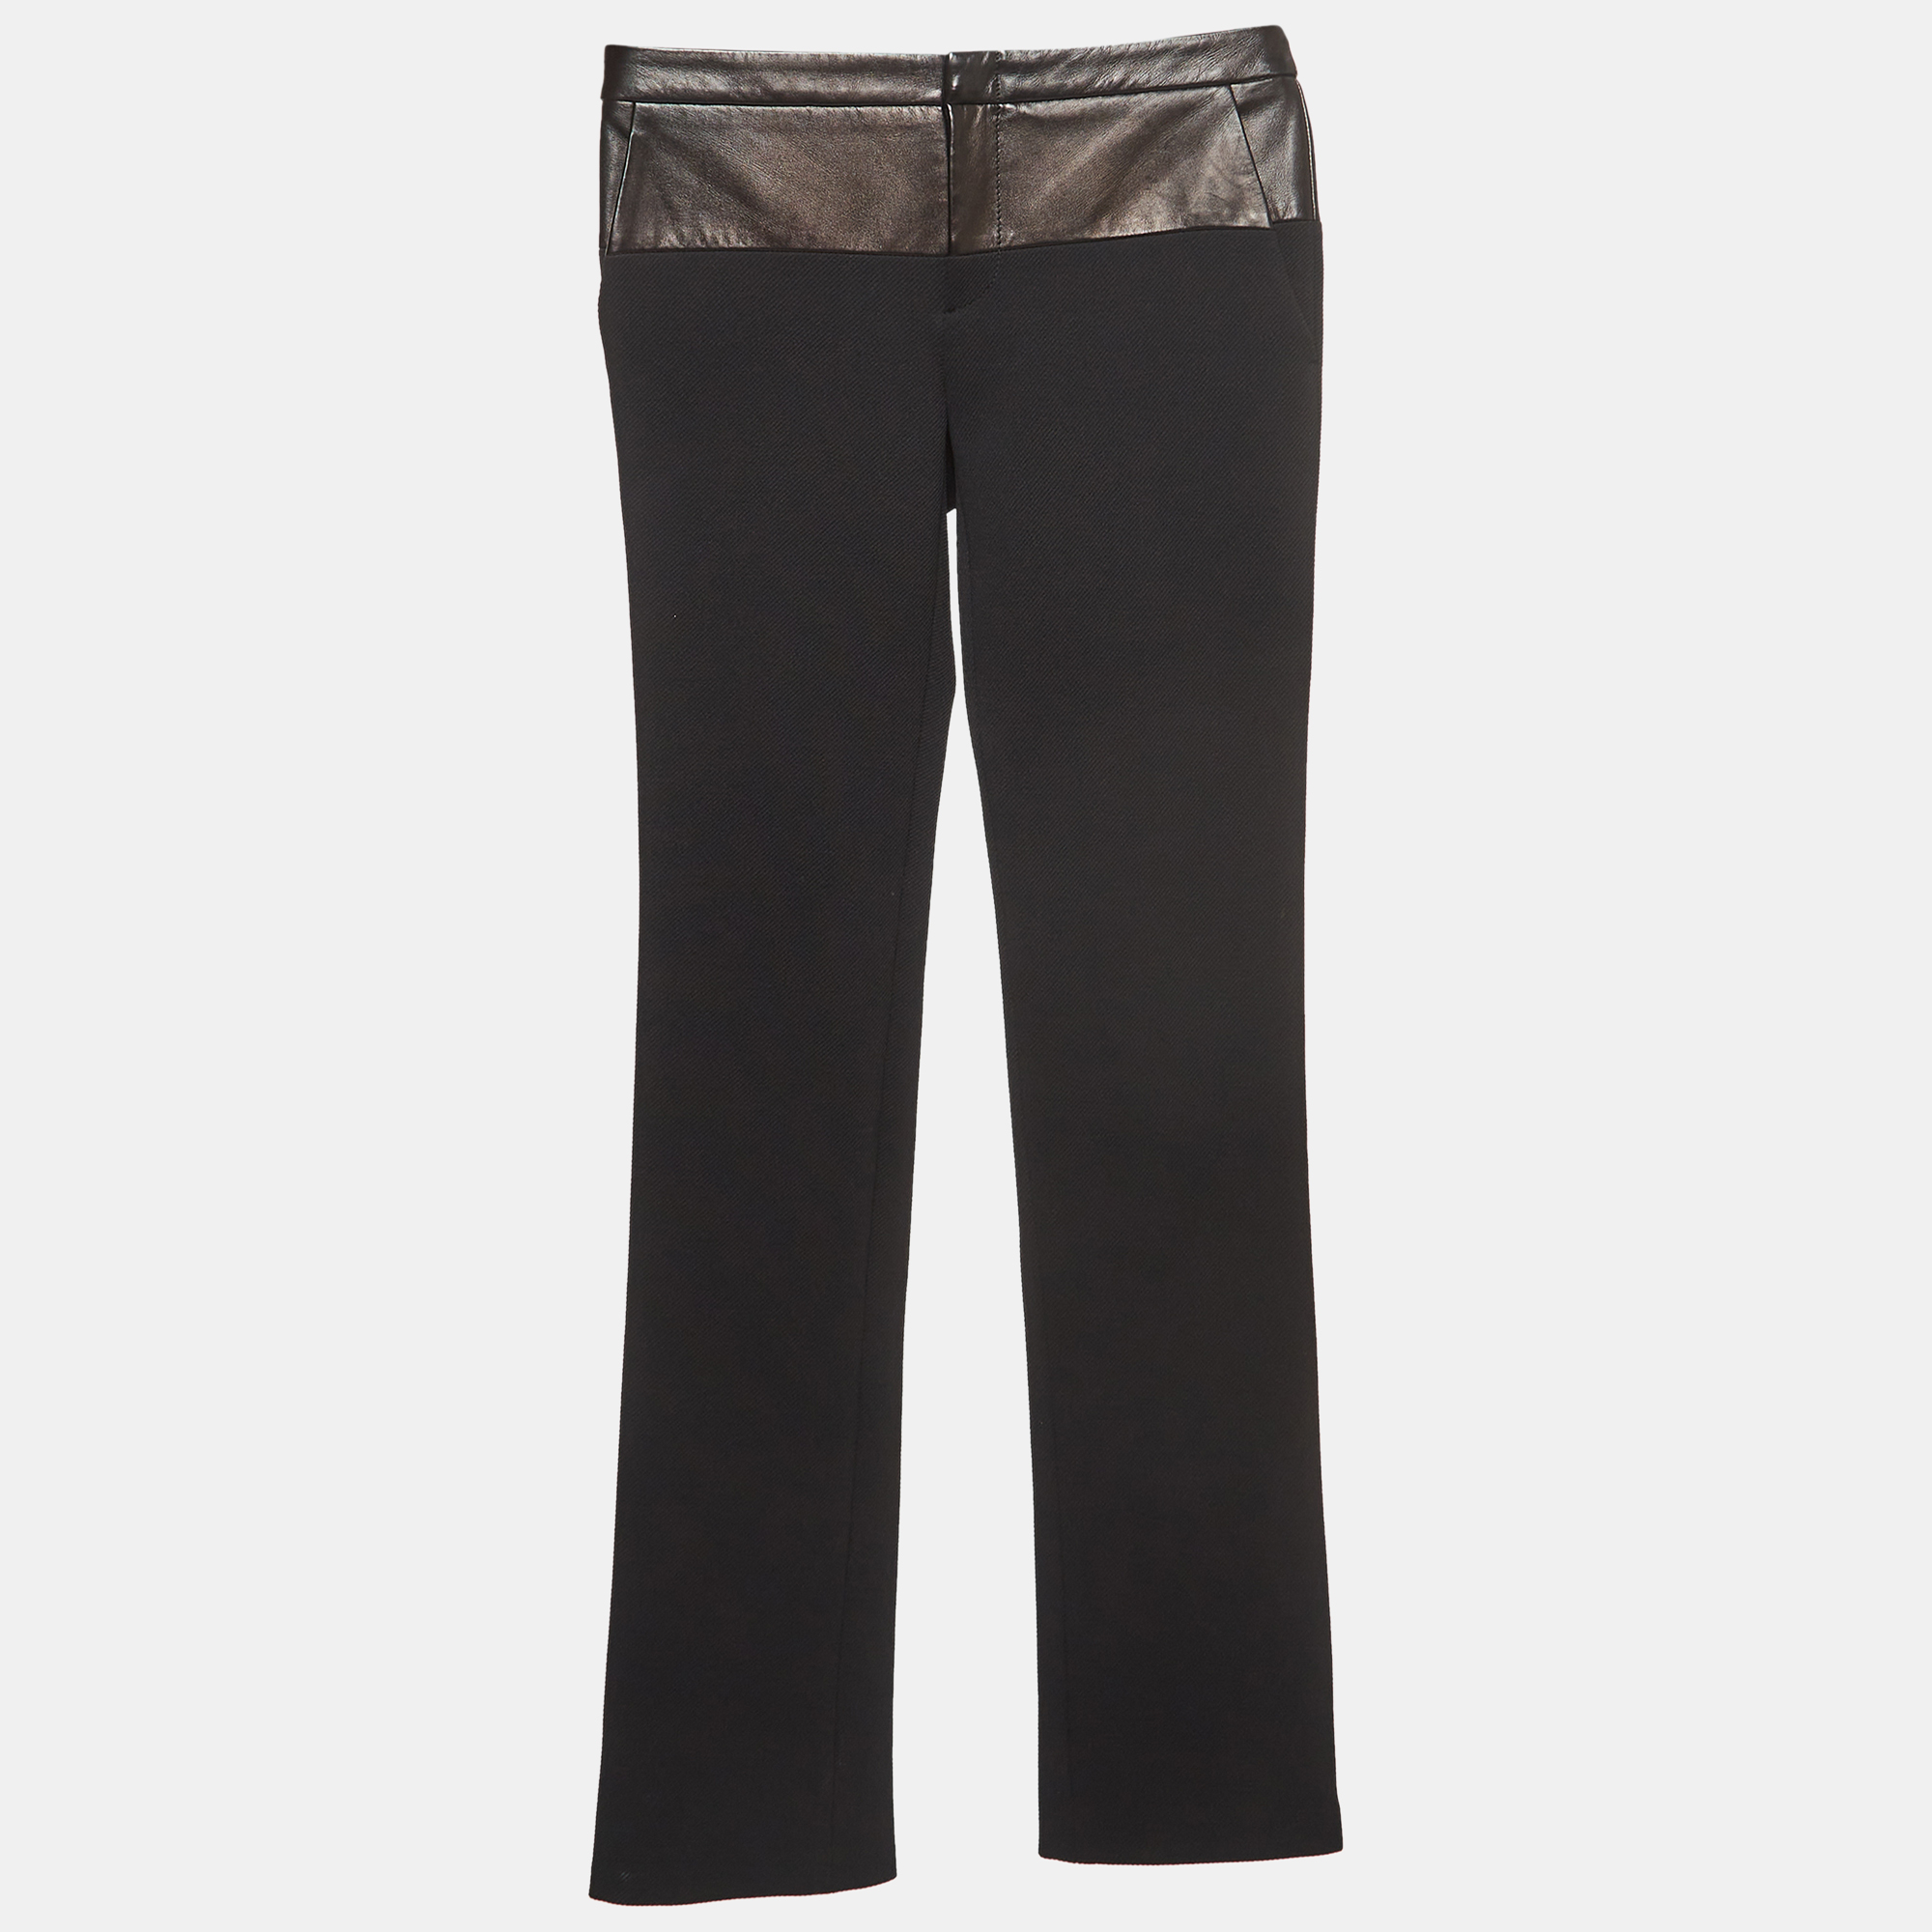 Gucci black leather trim nylon twill slim fit trousers s